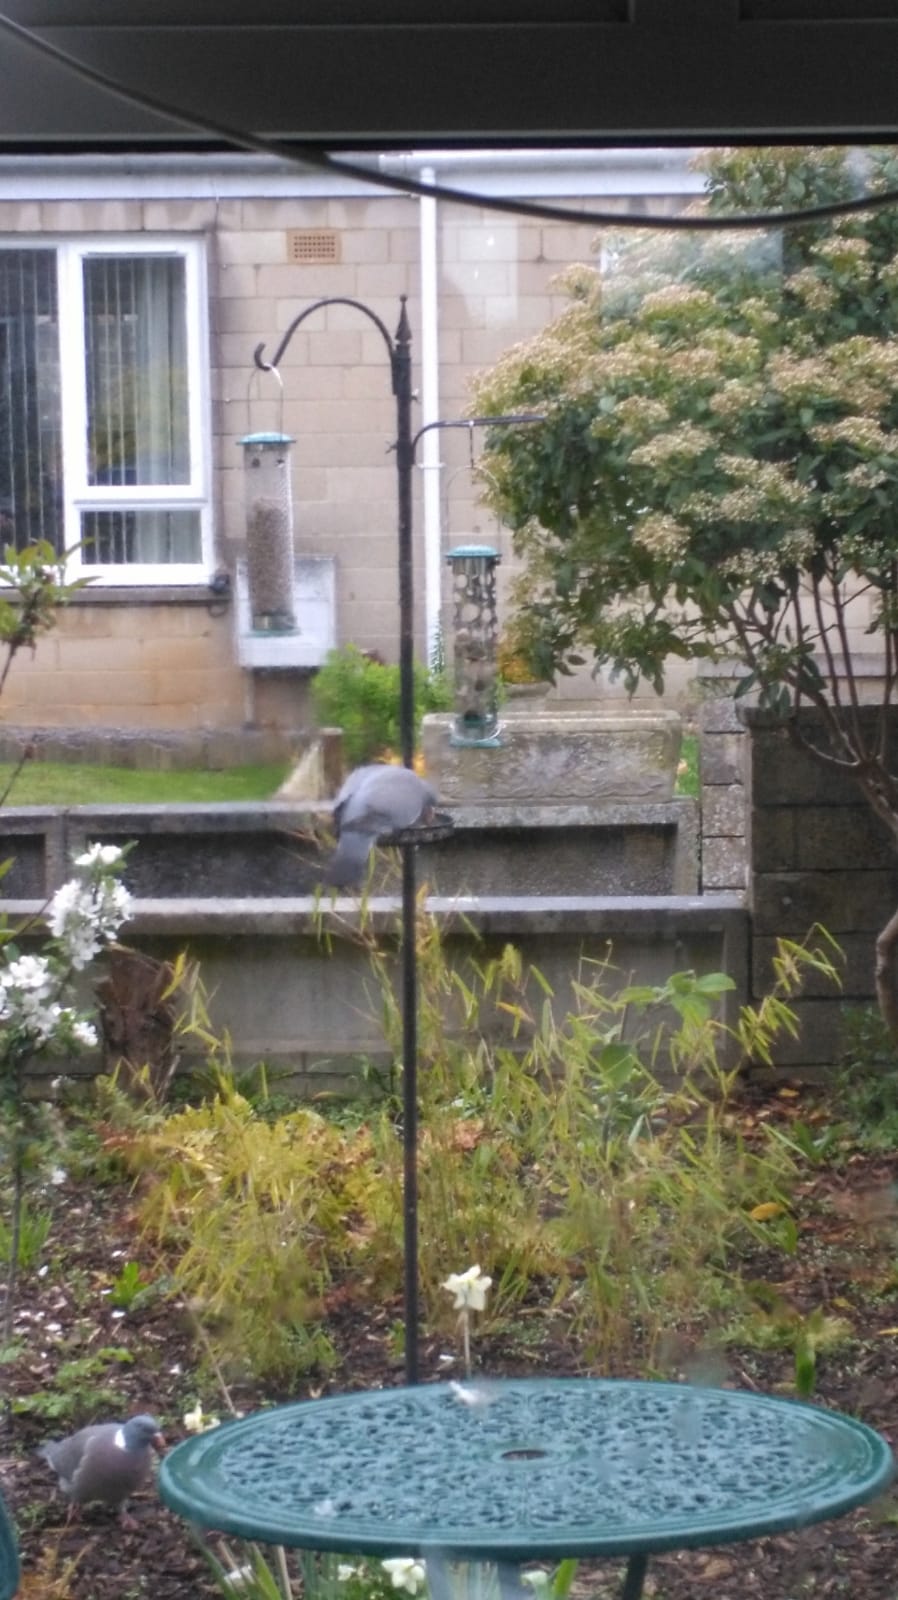 A pigeon perches carefully on a bird feeder